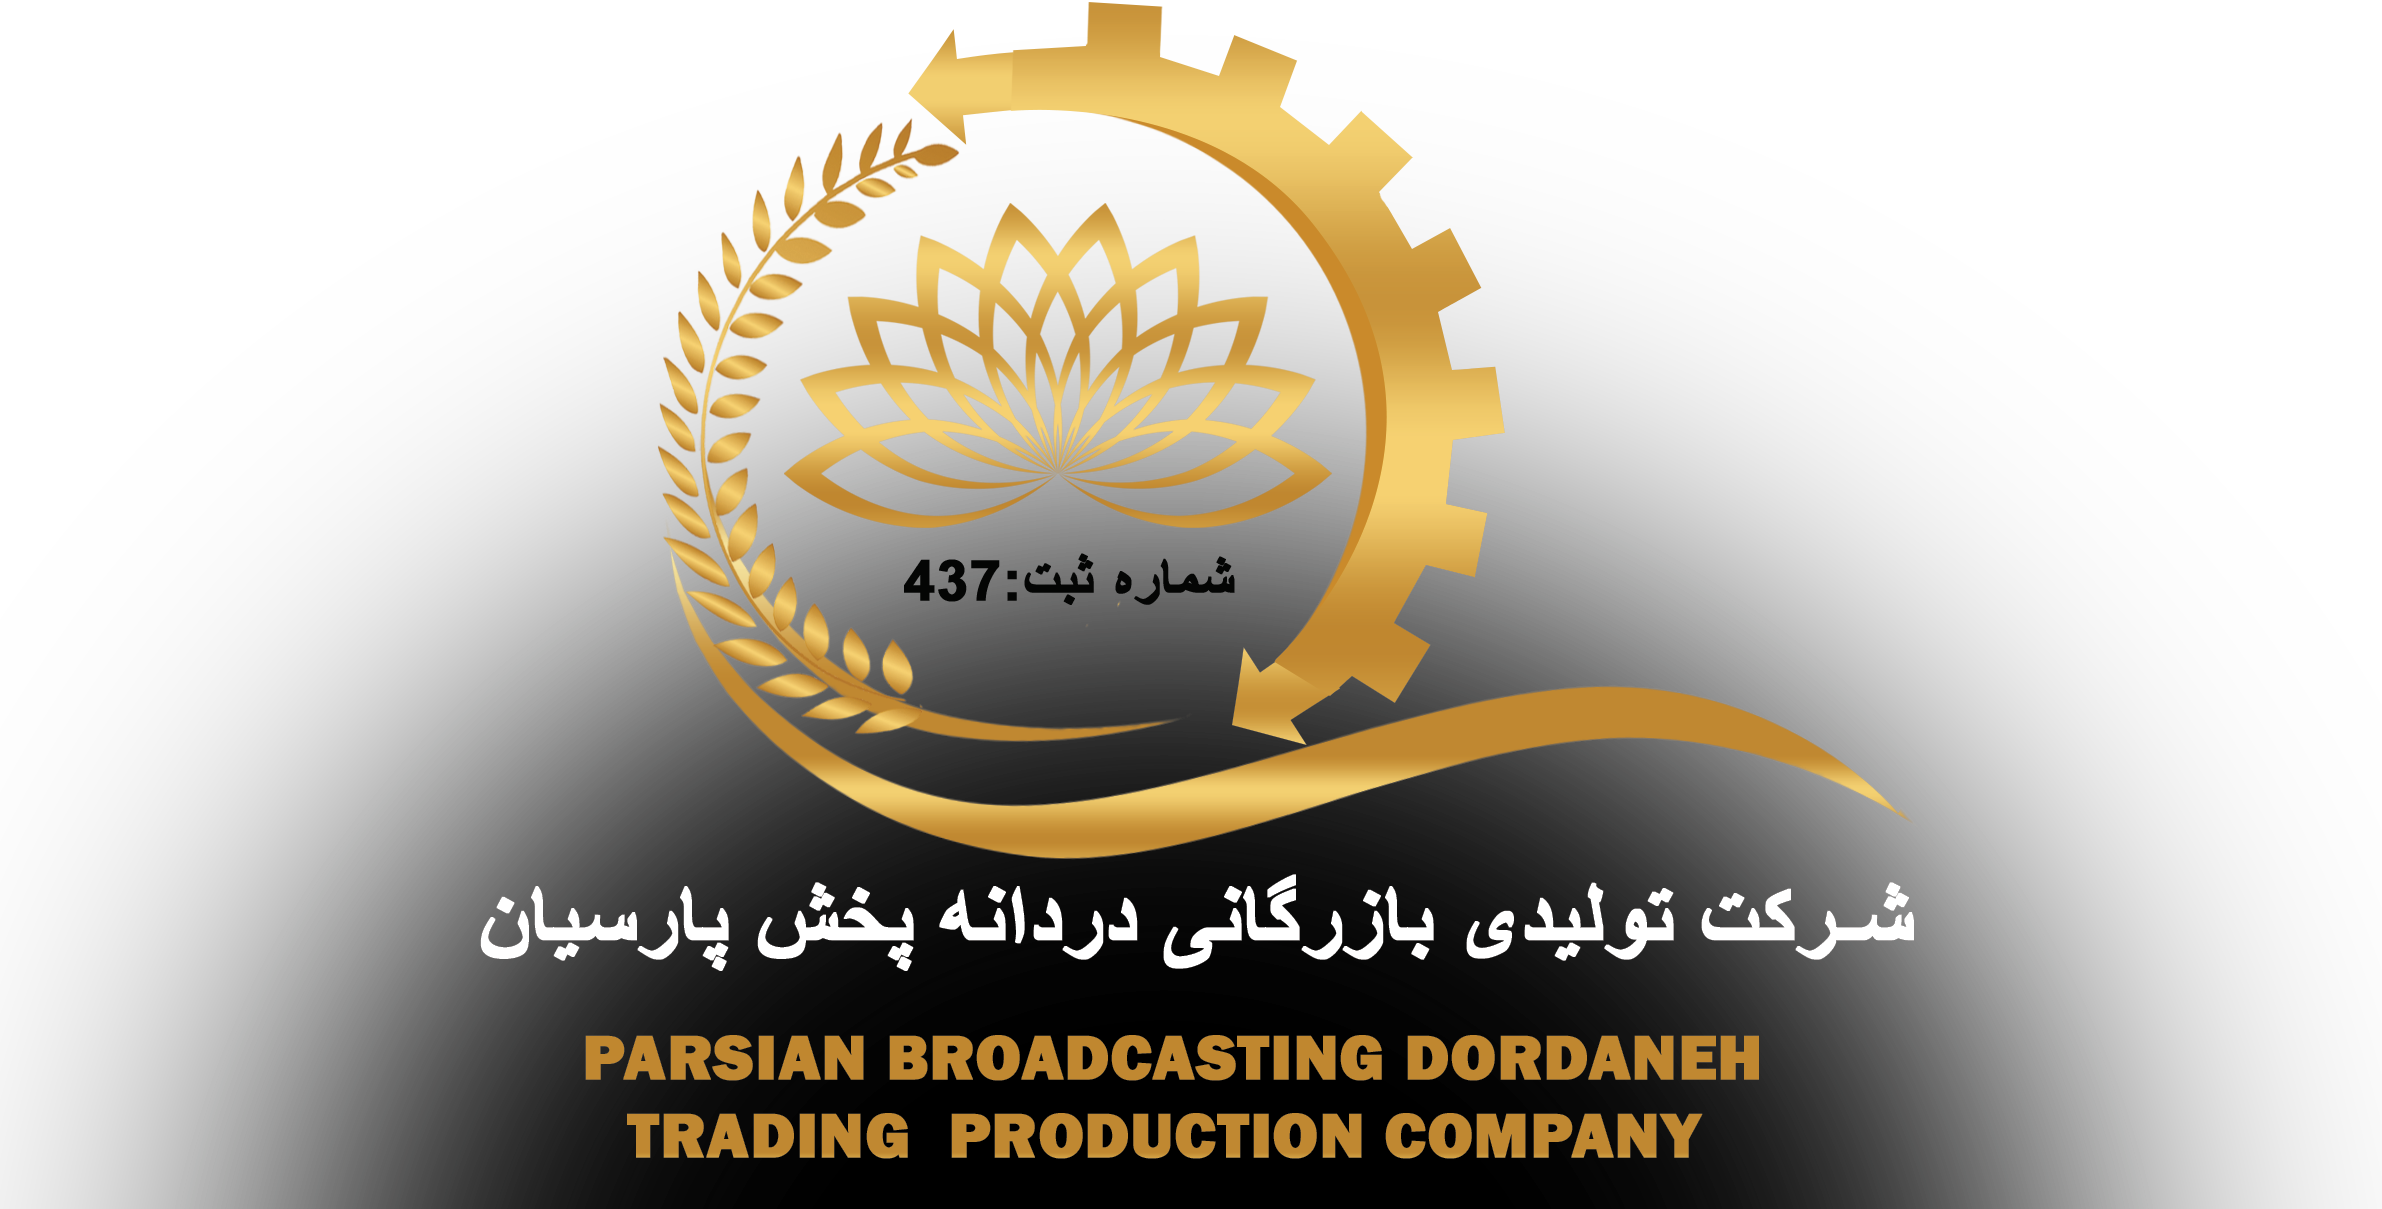 Parsian Broadcasting Dordaneh Trading Production Company